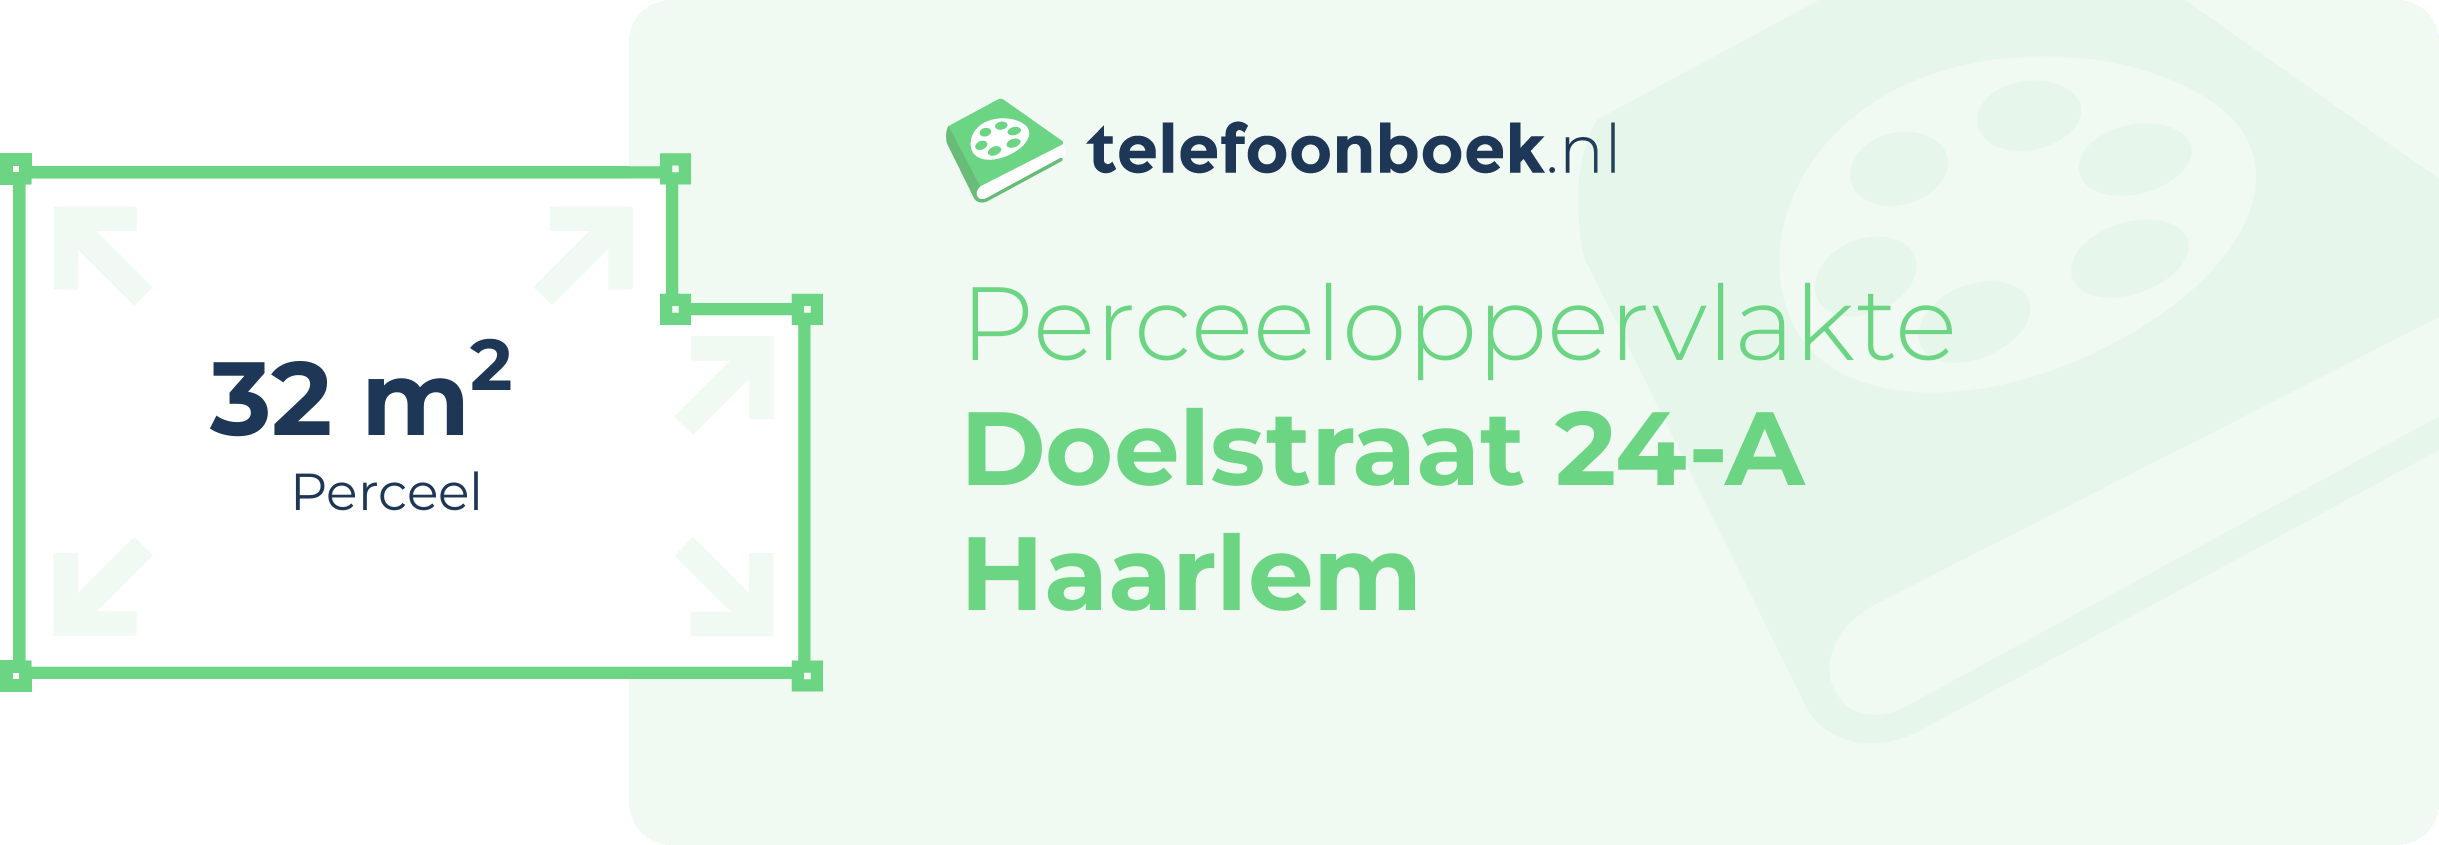 Perceeloppervlakte Doelstraat 24-A Haarlem